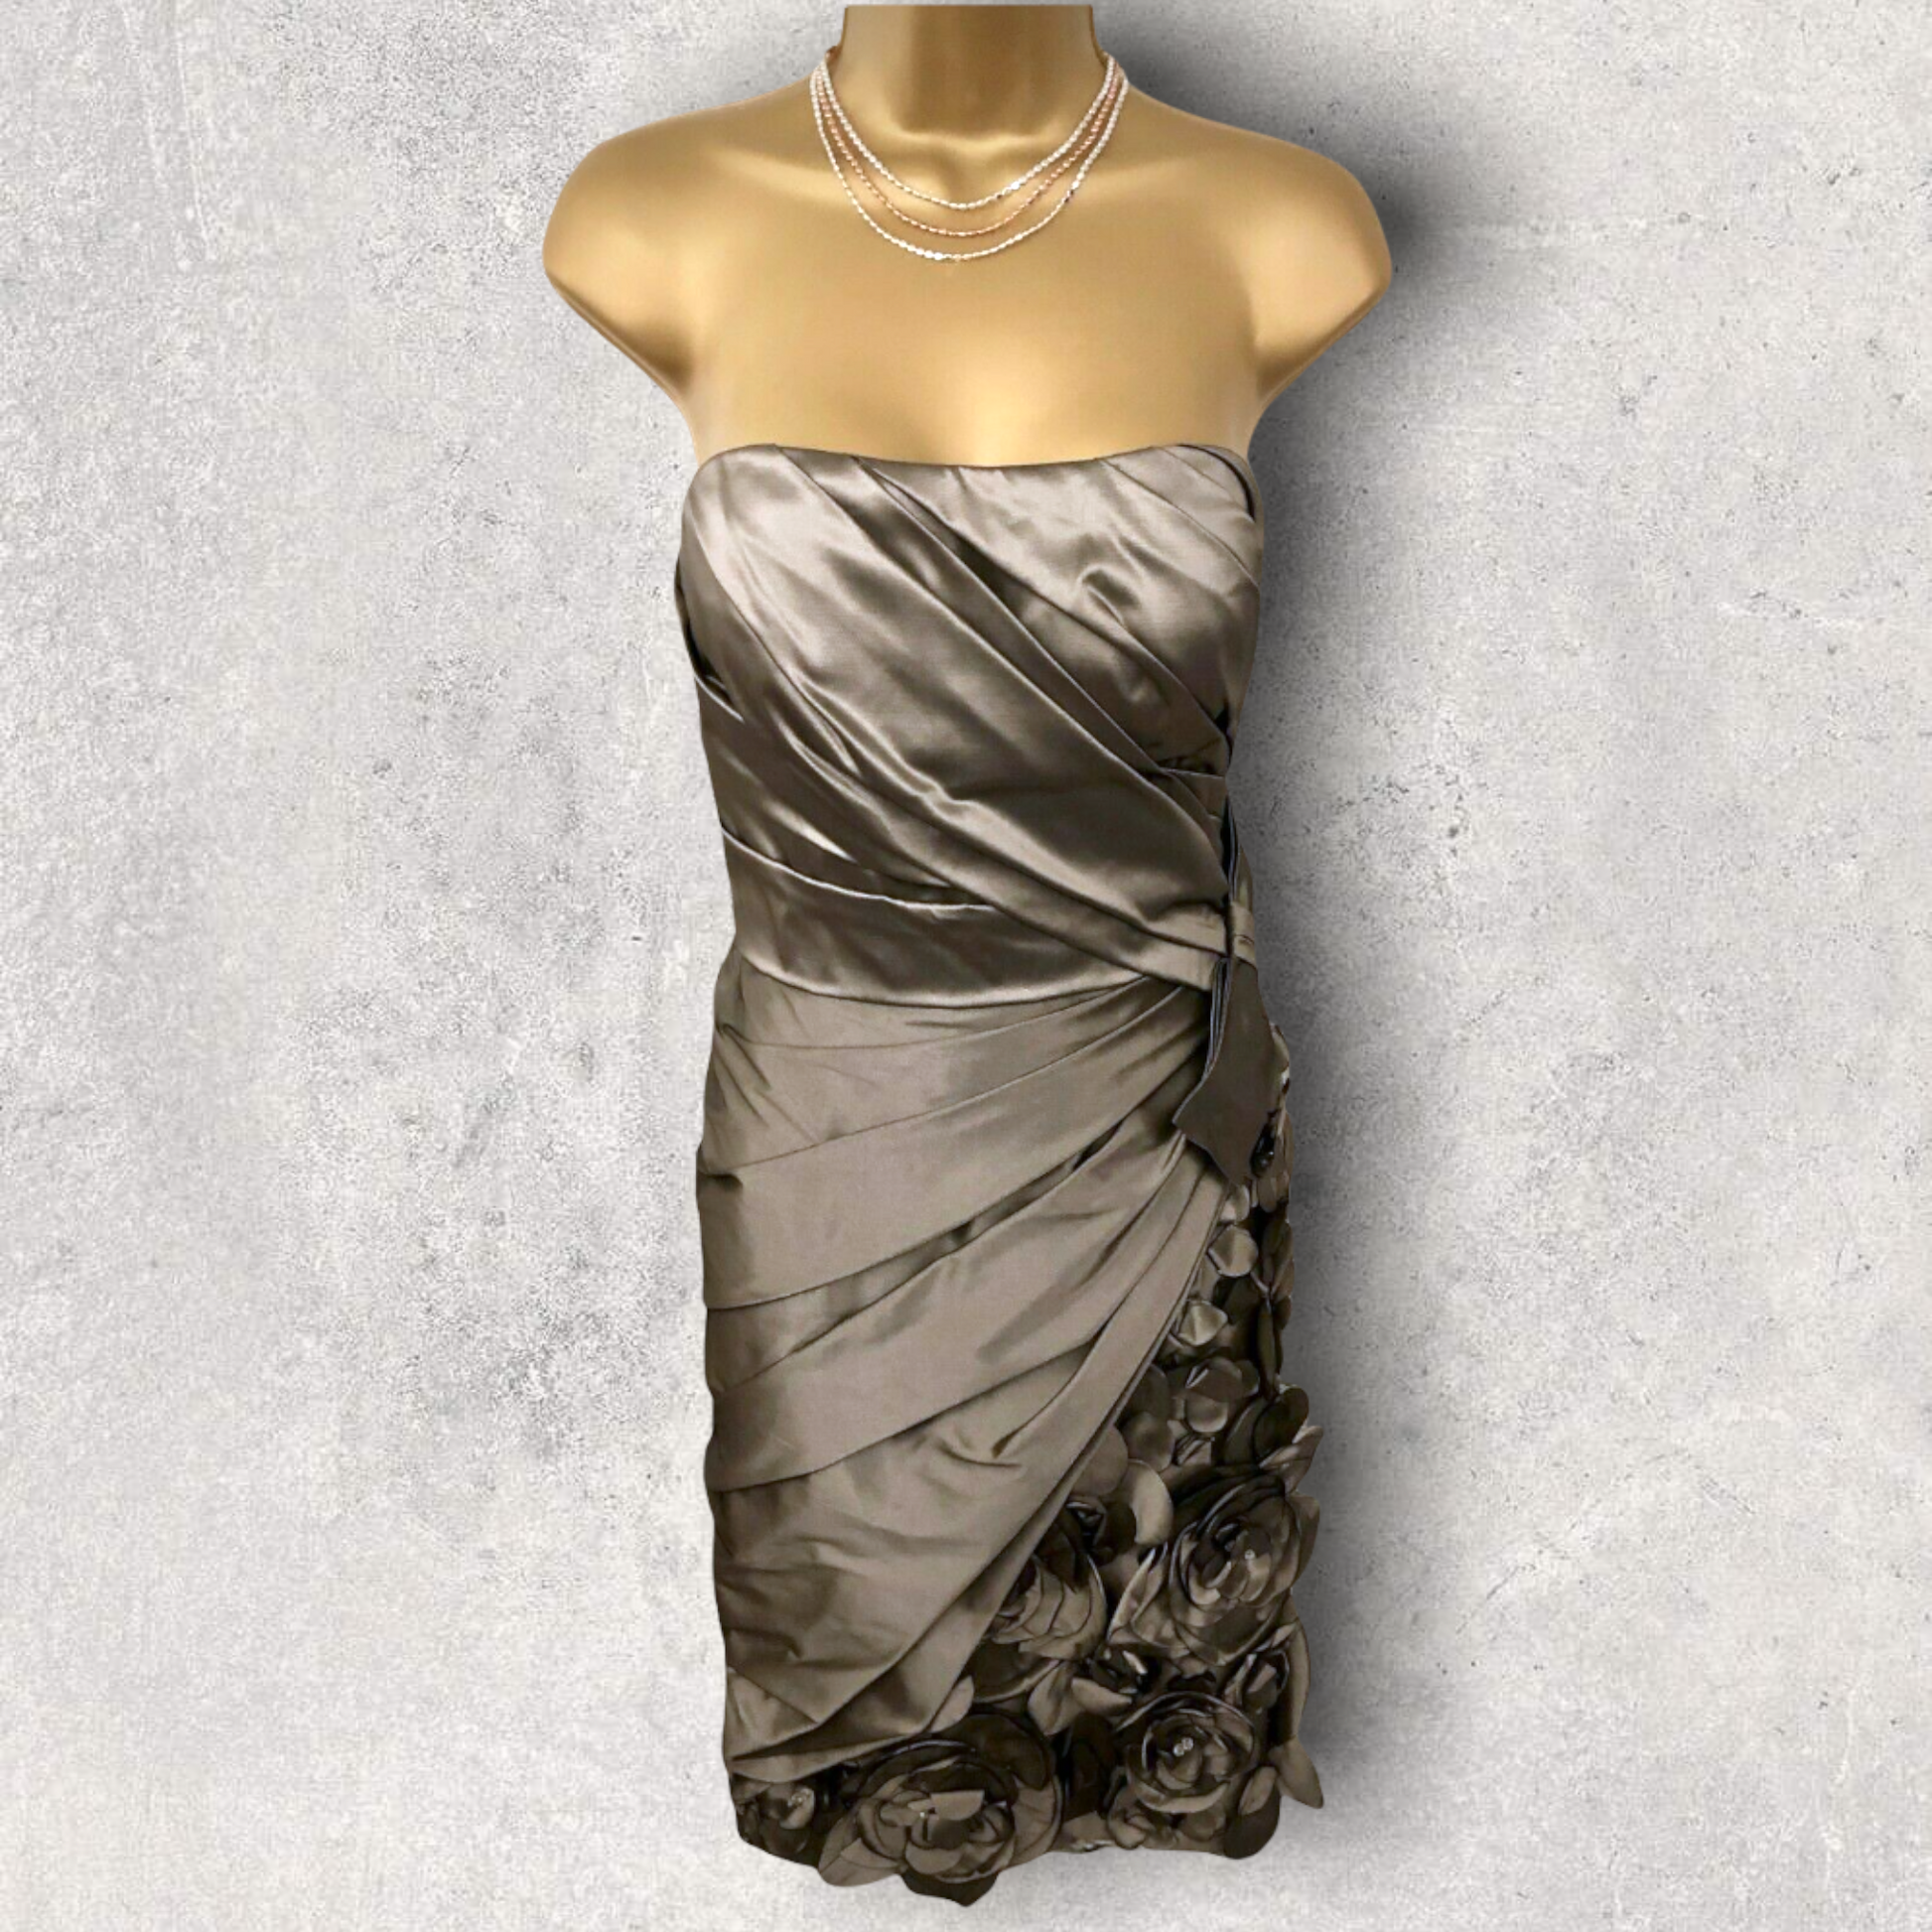 Love by Enzoani Shimmer Grey Wedding Dress Suit UK 10 US 6 EU 38 BNWT RRP £695 Timeless Fashions